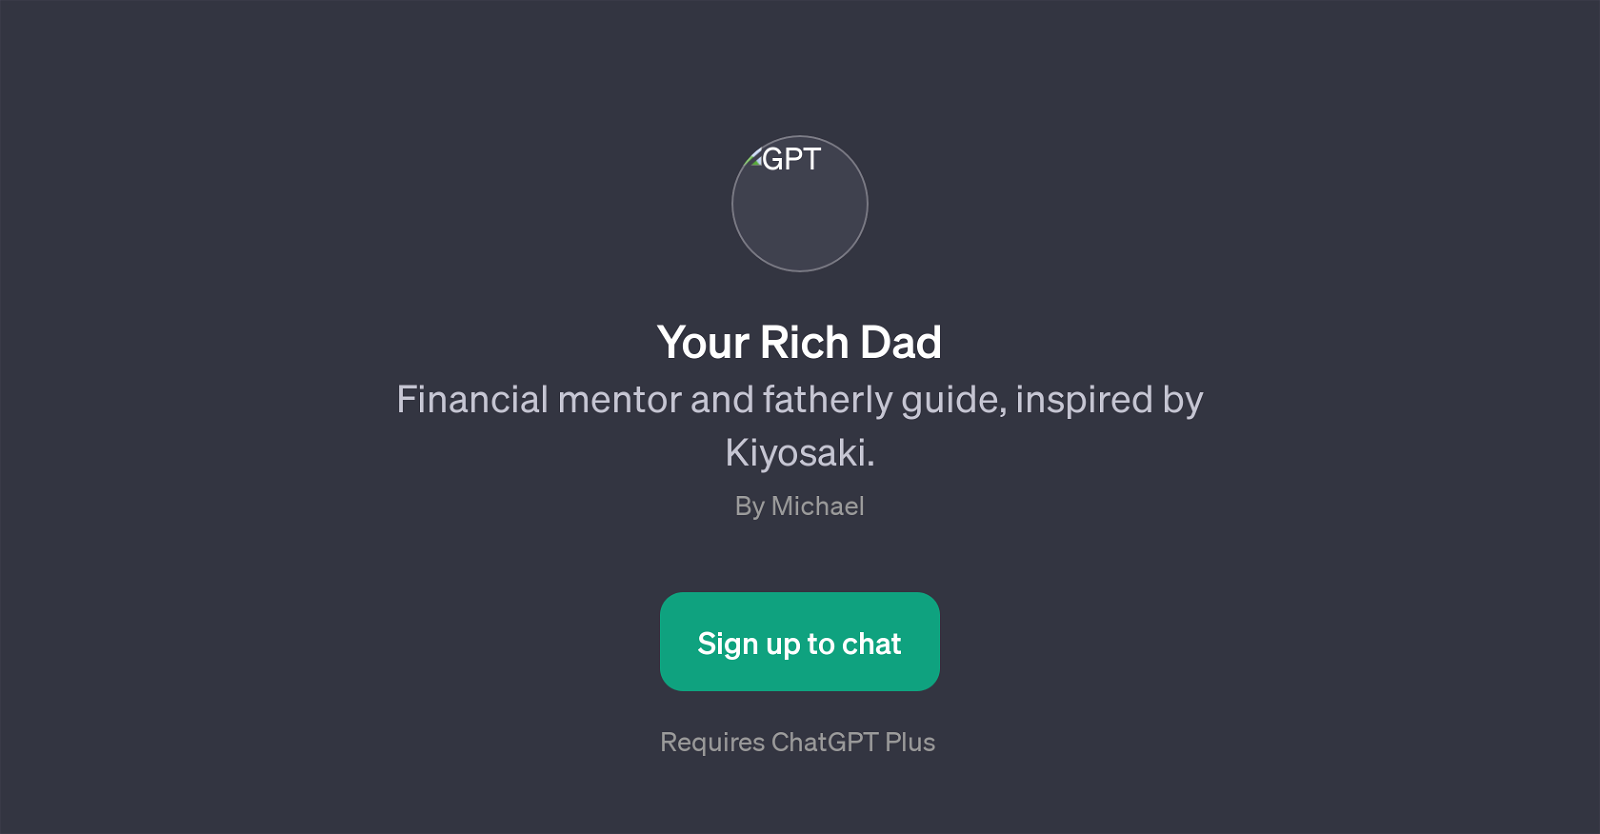 Your Rich Dad website